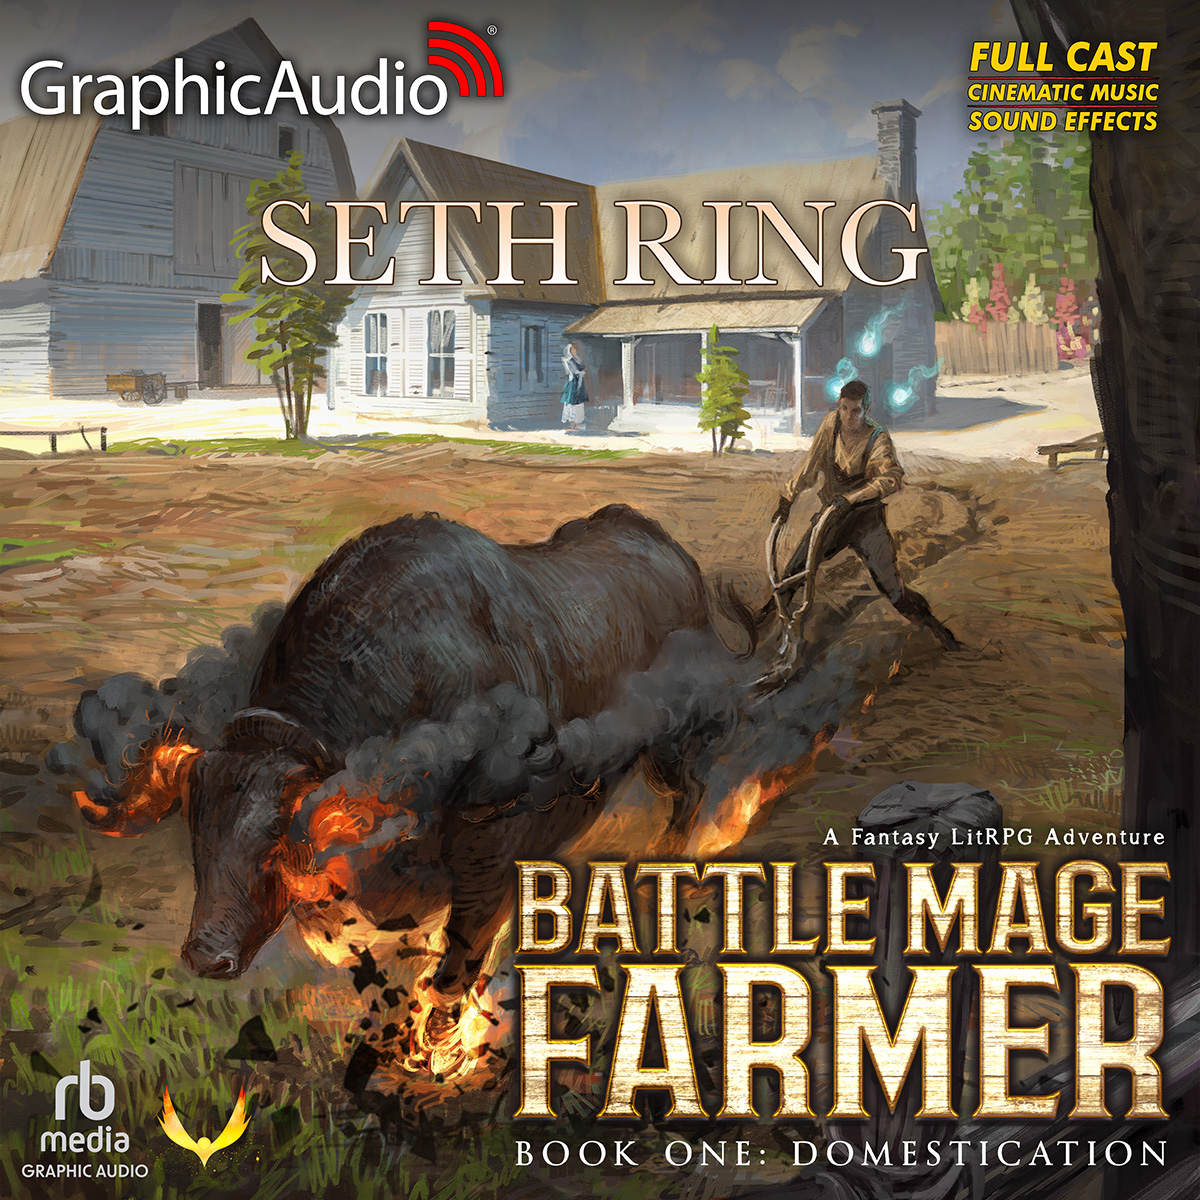 Battle Mage Farmer